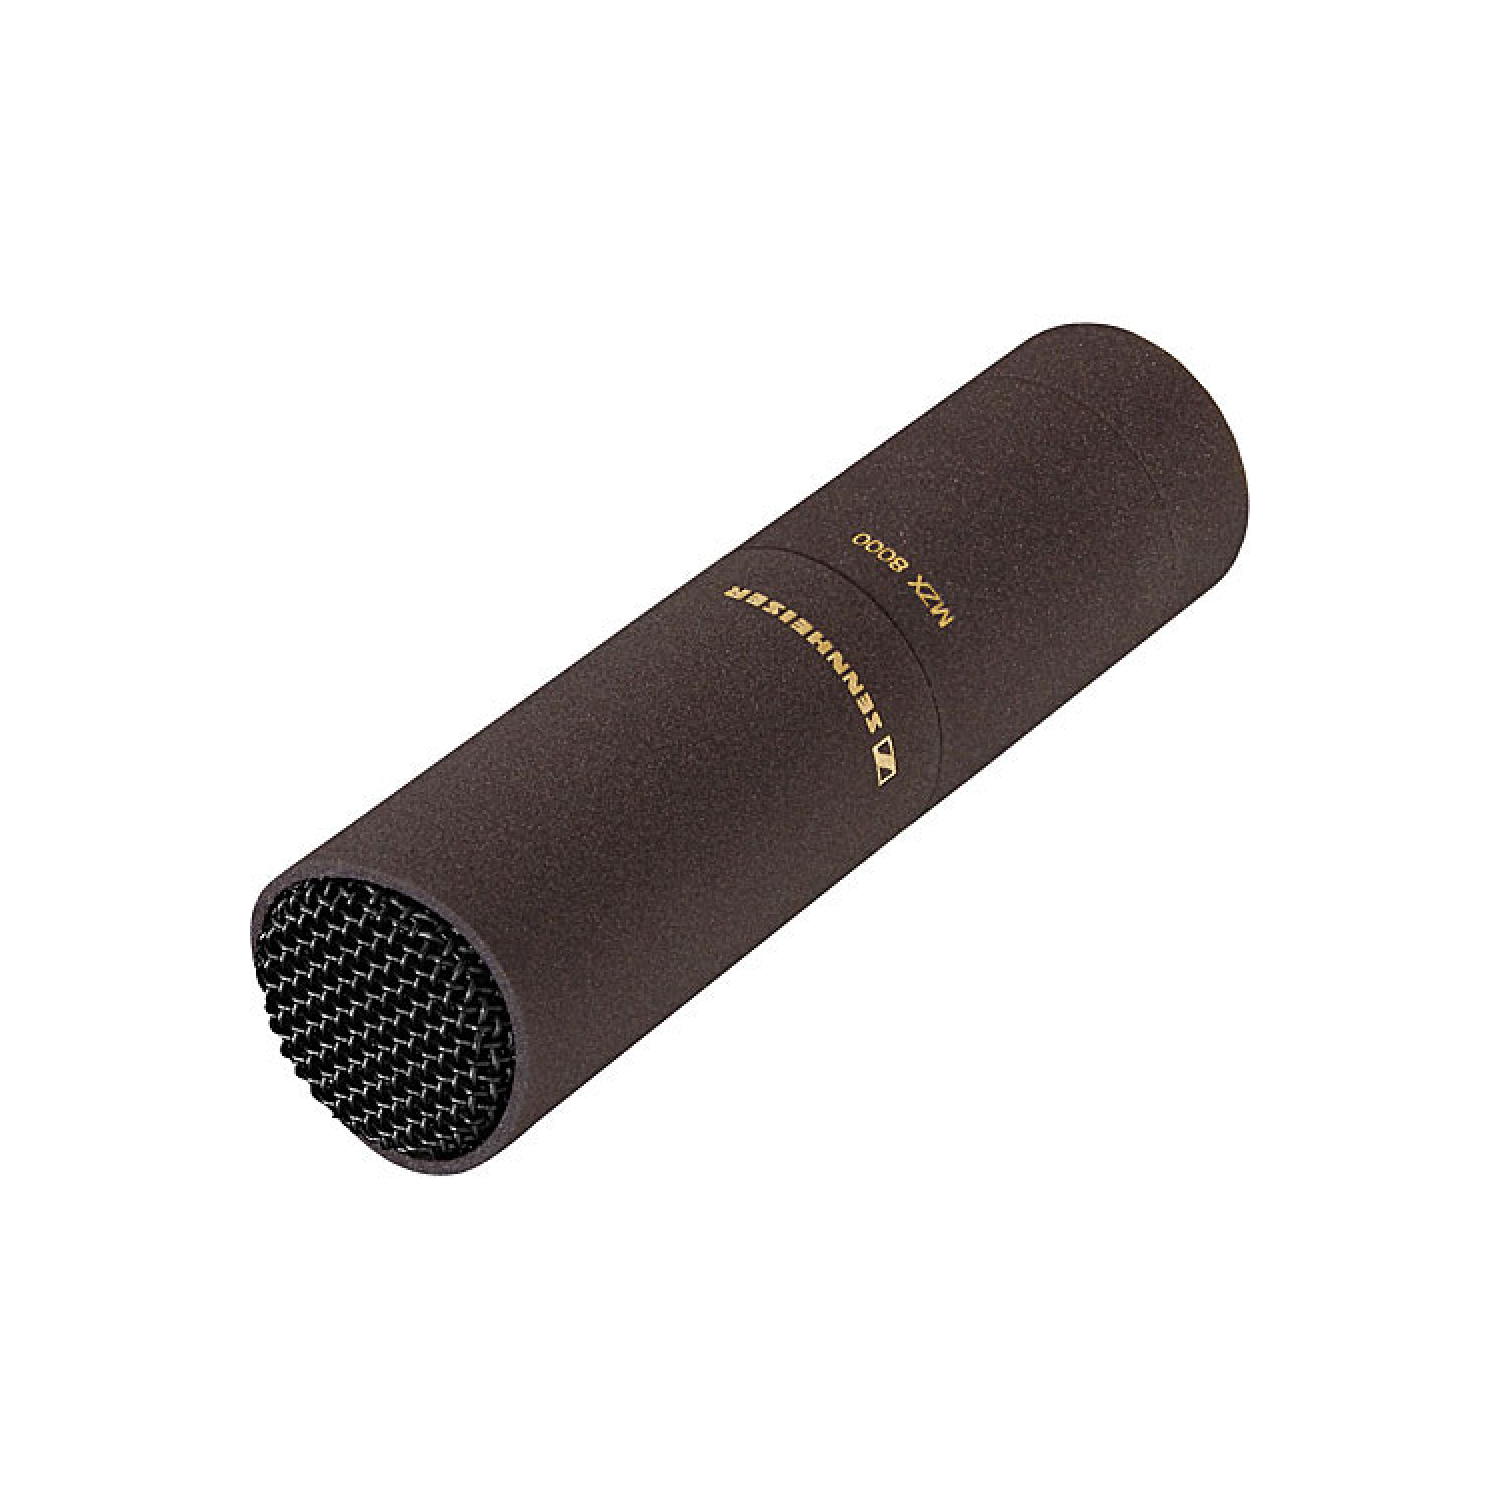 Sennheiser MKH 8020 Compact Omnidirectional Condenser Microphone (Stereo Set)